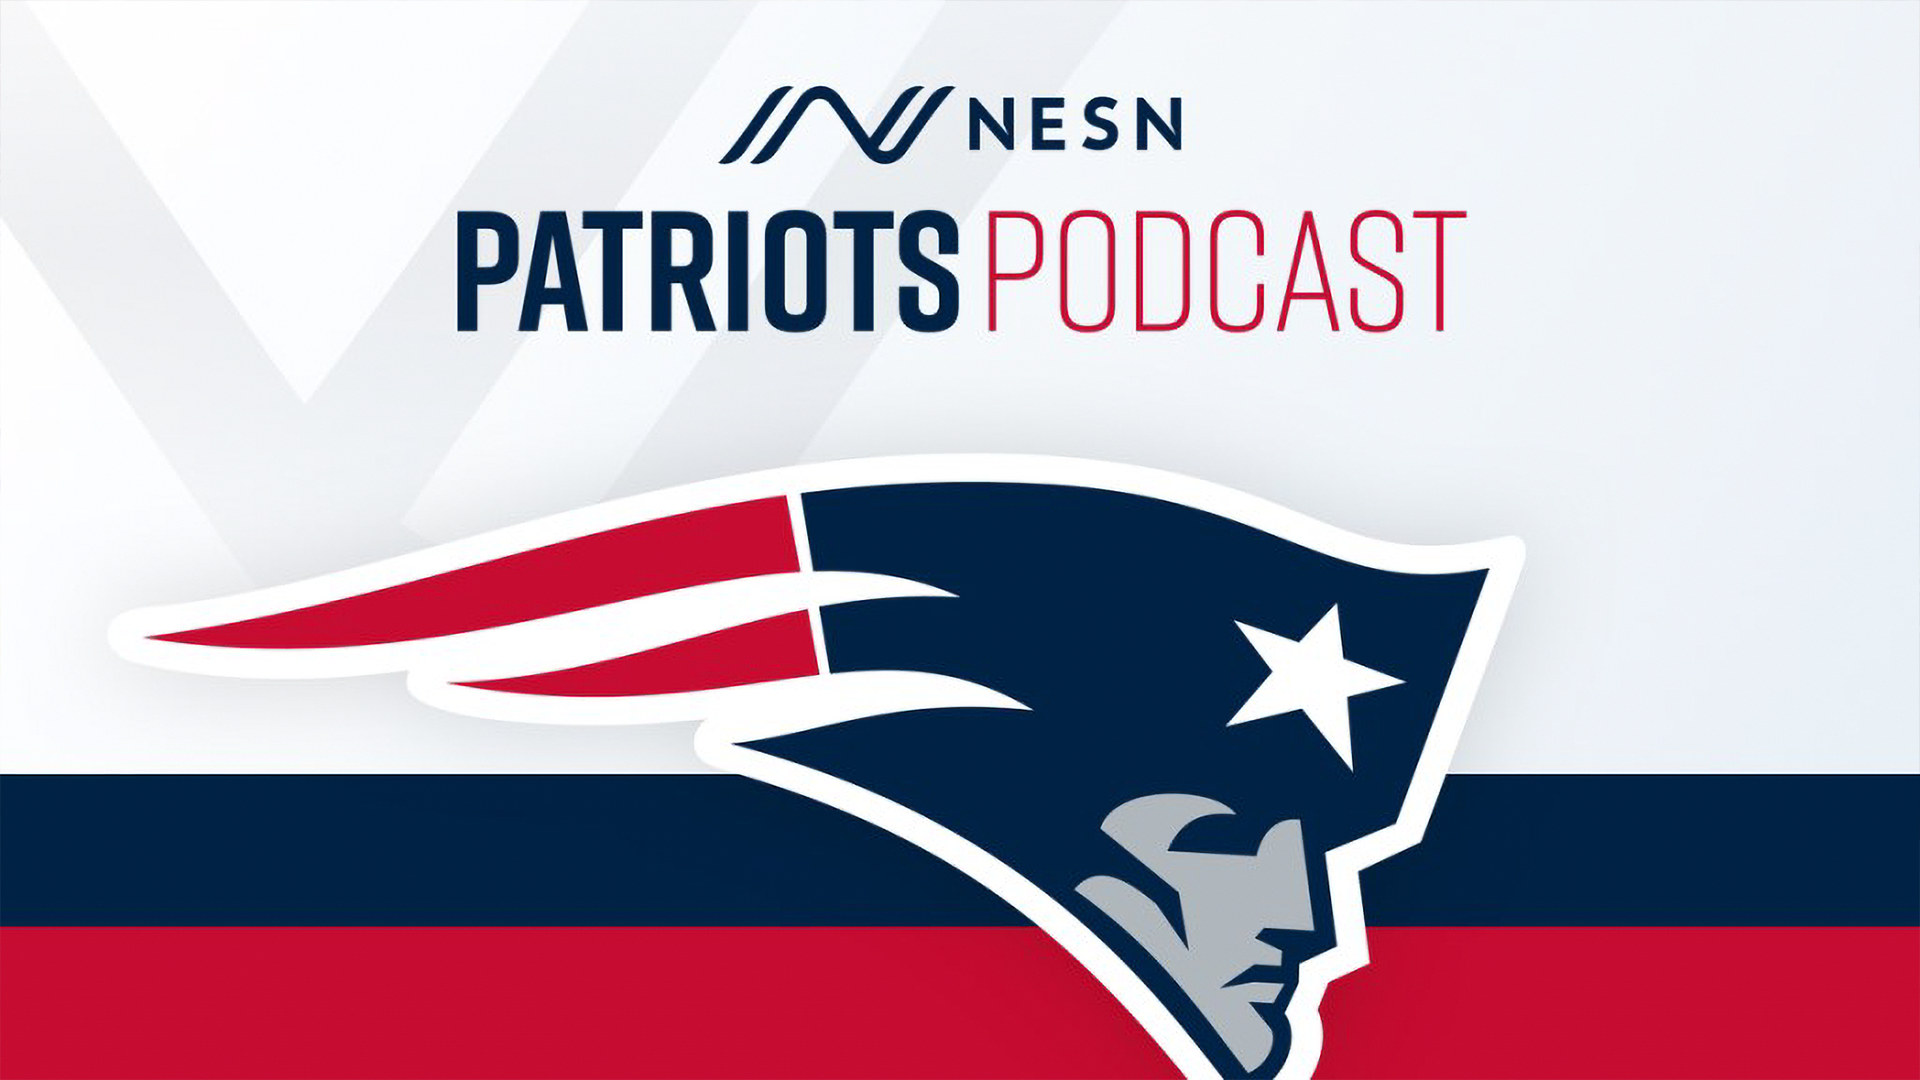 NESN Patriots Podcast on Apple Podcasts